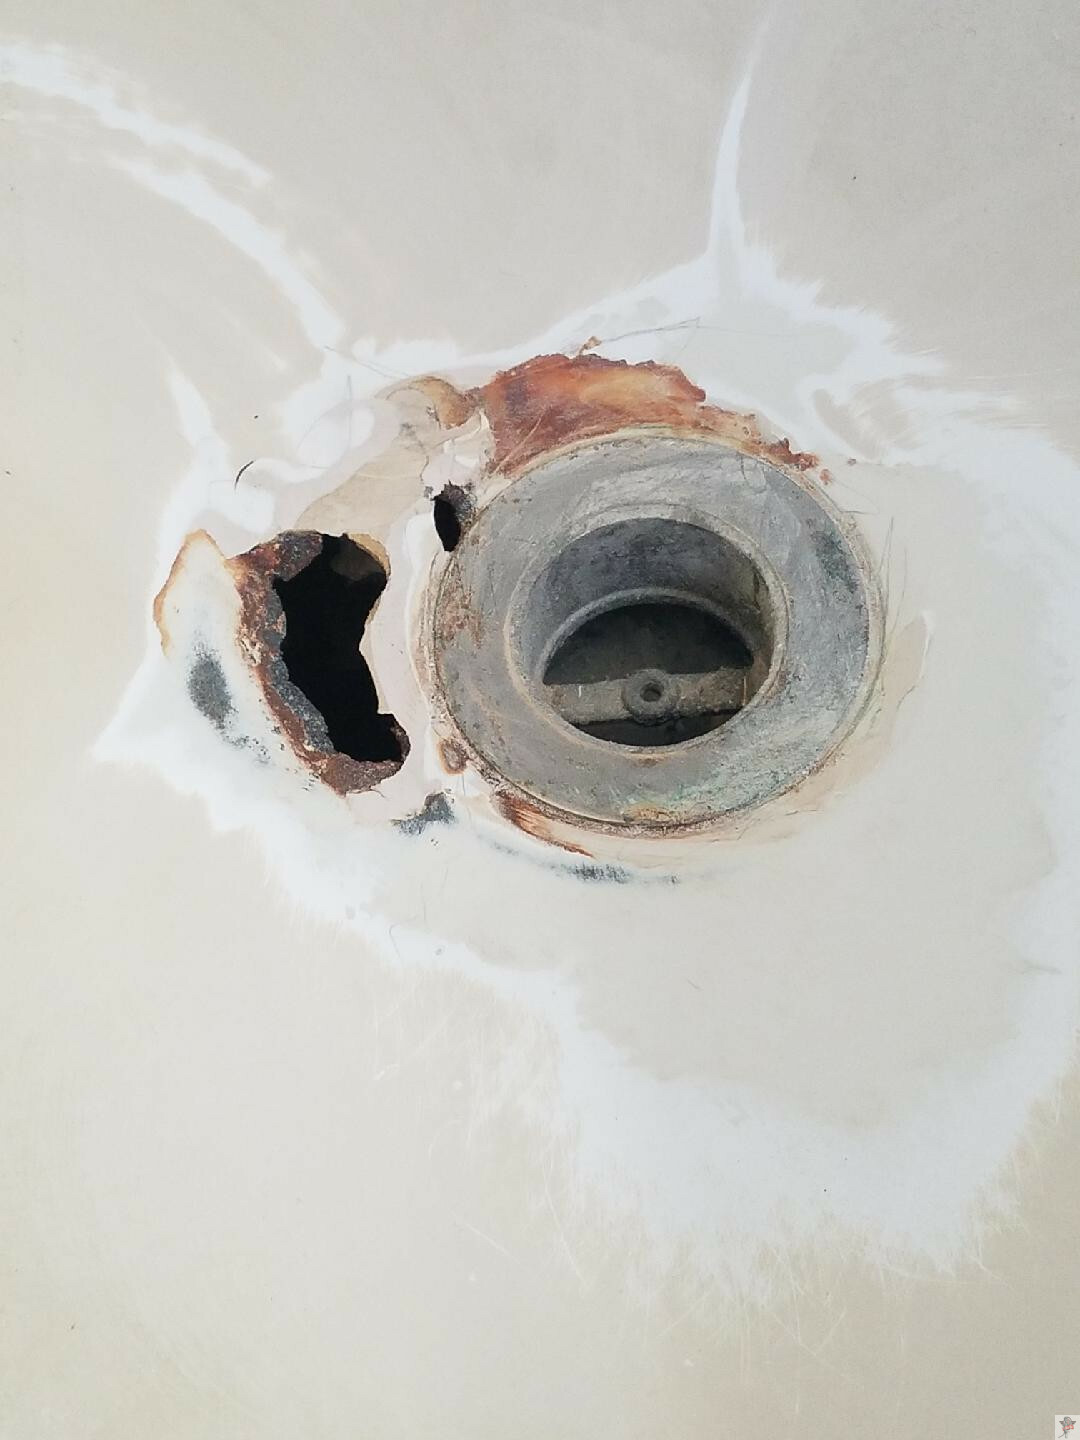 Tub Refinishing Repair Rust More, How To Fix Rust Around Bathtub Drain